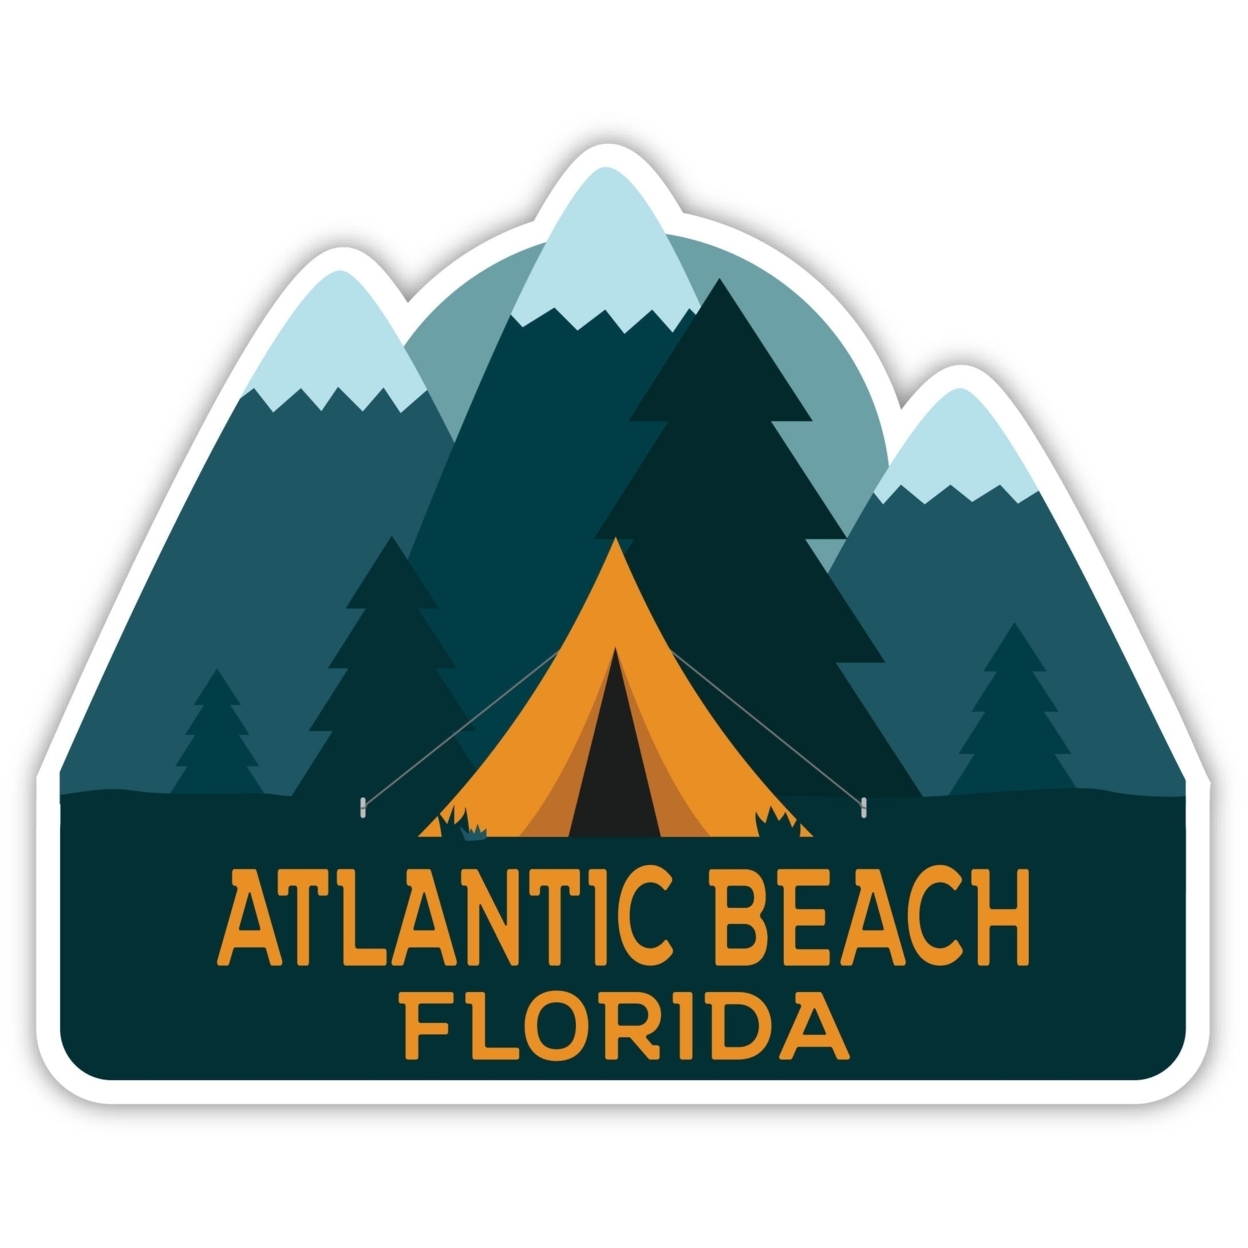 Atlantic Beach Florida Souvenir Decorative Stickers (Choose Theme And Size) - 4-Pack, 12-Inch, Tent